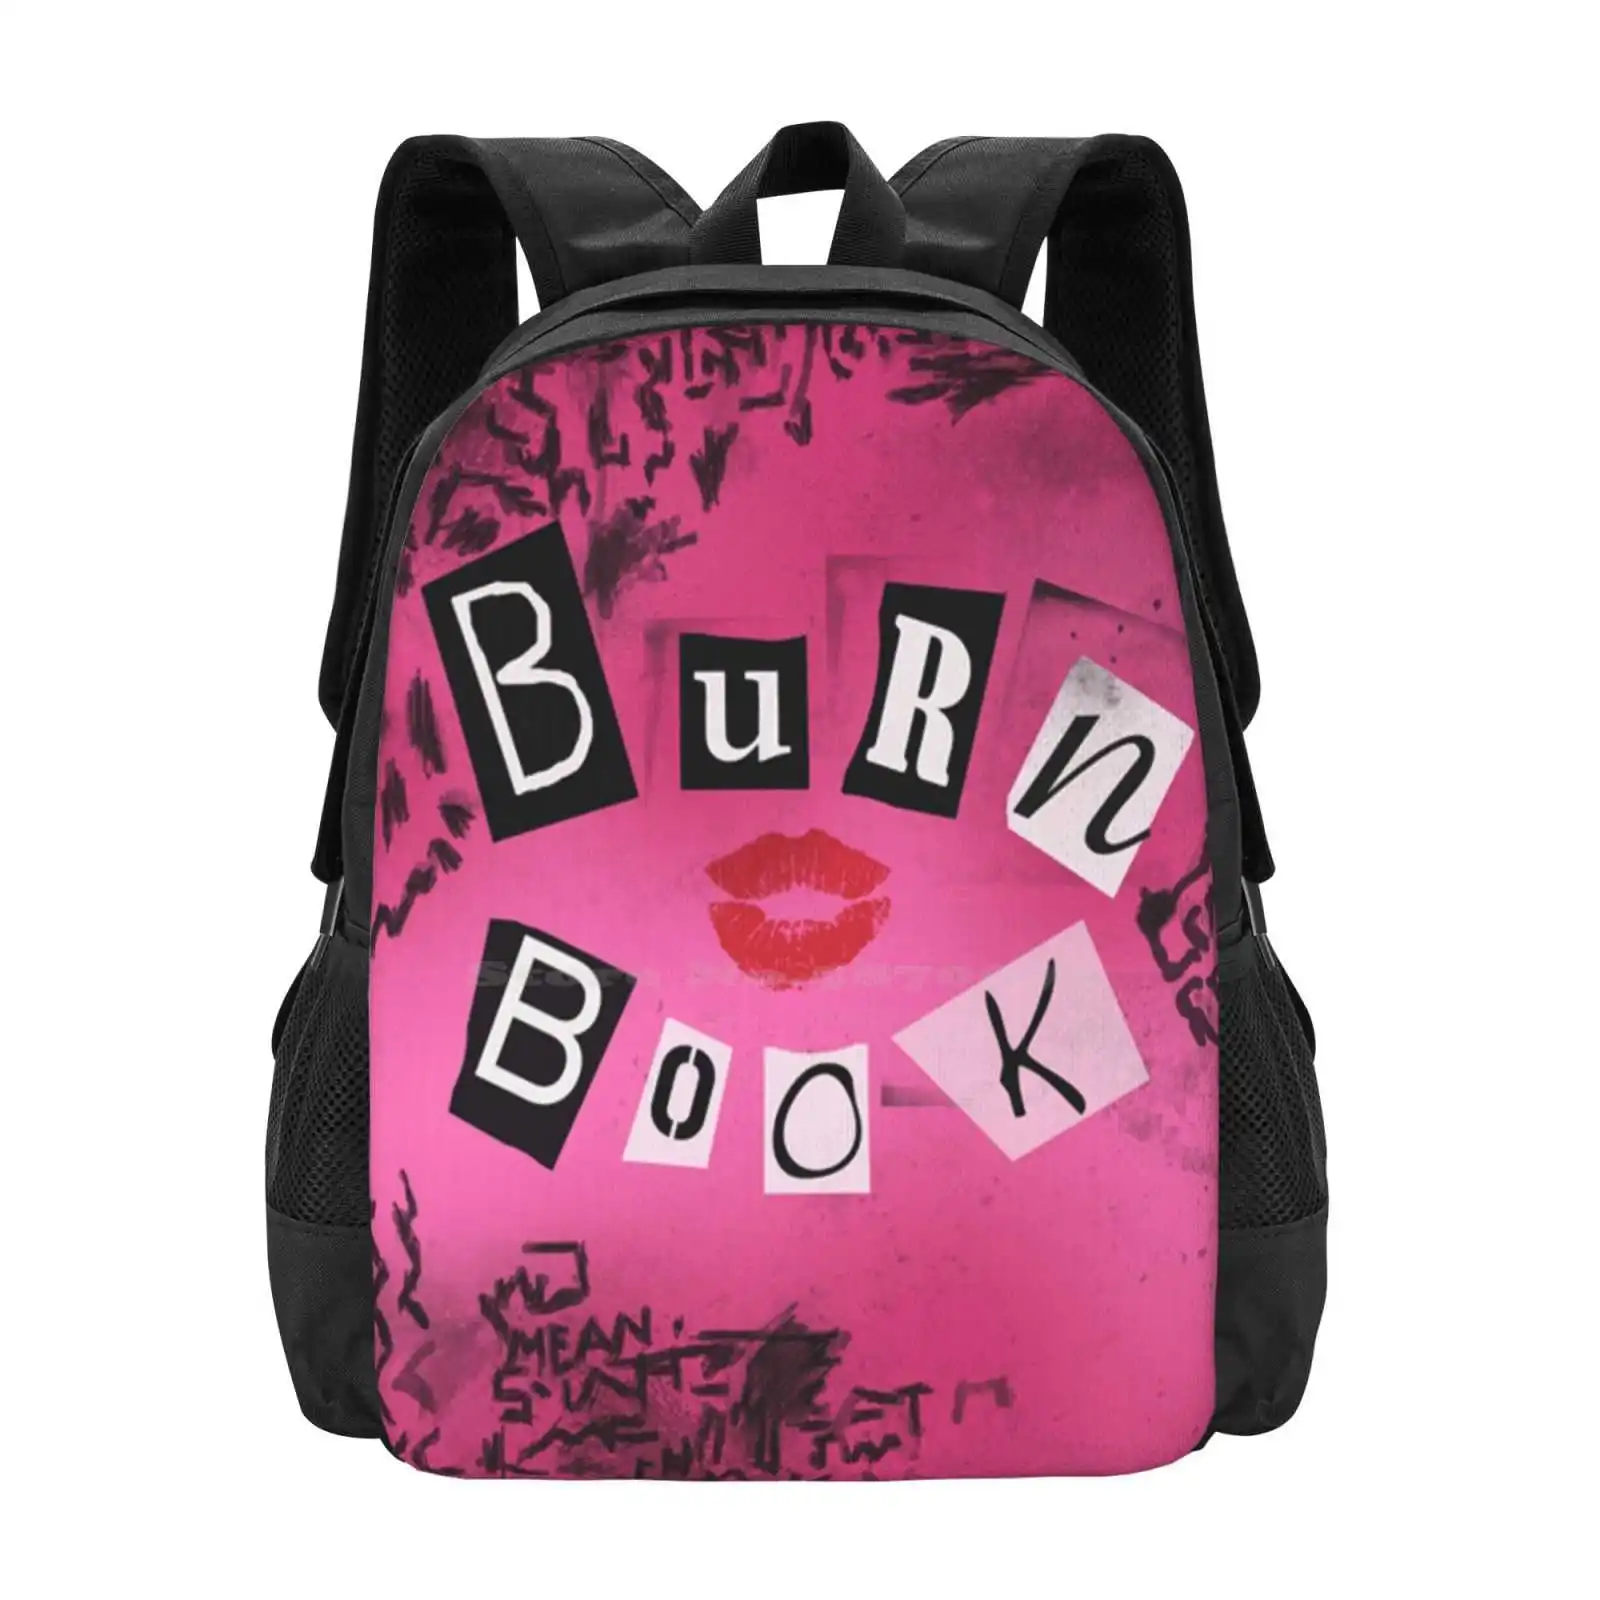 

Mean Girls - Burn Book 3D Print Design Backpack Student Bag Mean Girls Regina George Cadi Heron Karen Smith Norbury Janis Ian To